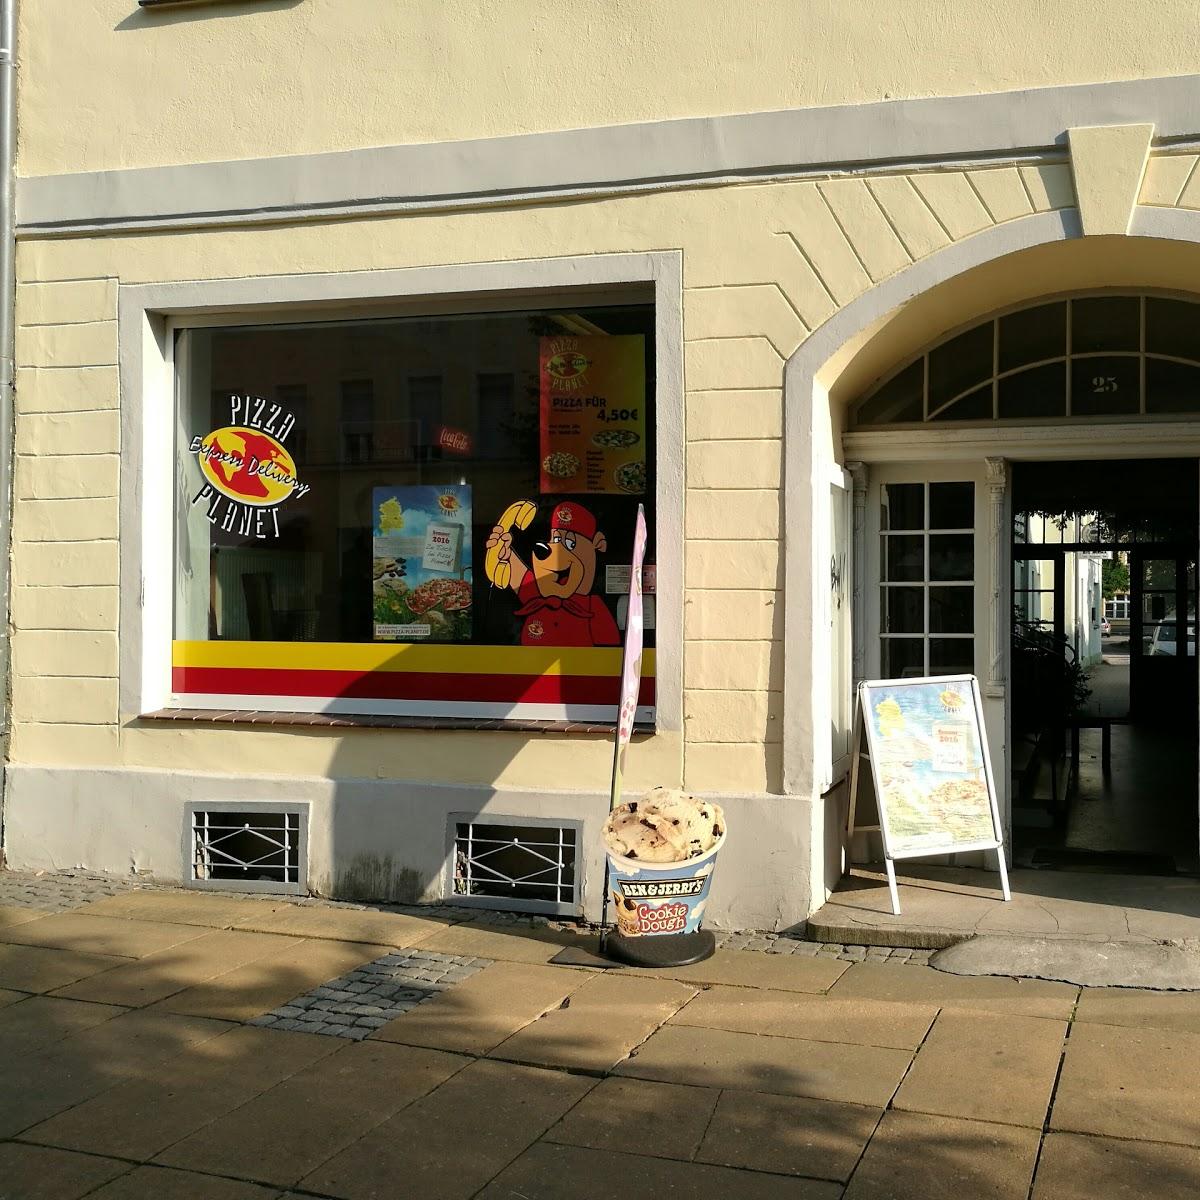 Restaurant "Pizza Planet" in Luckenwalde